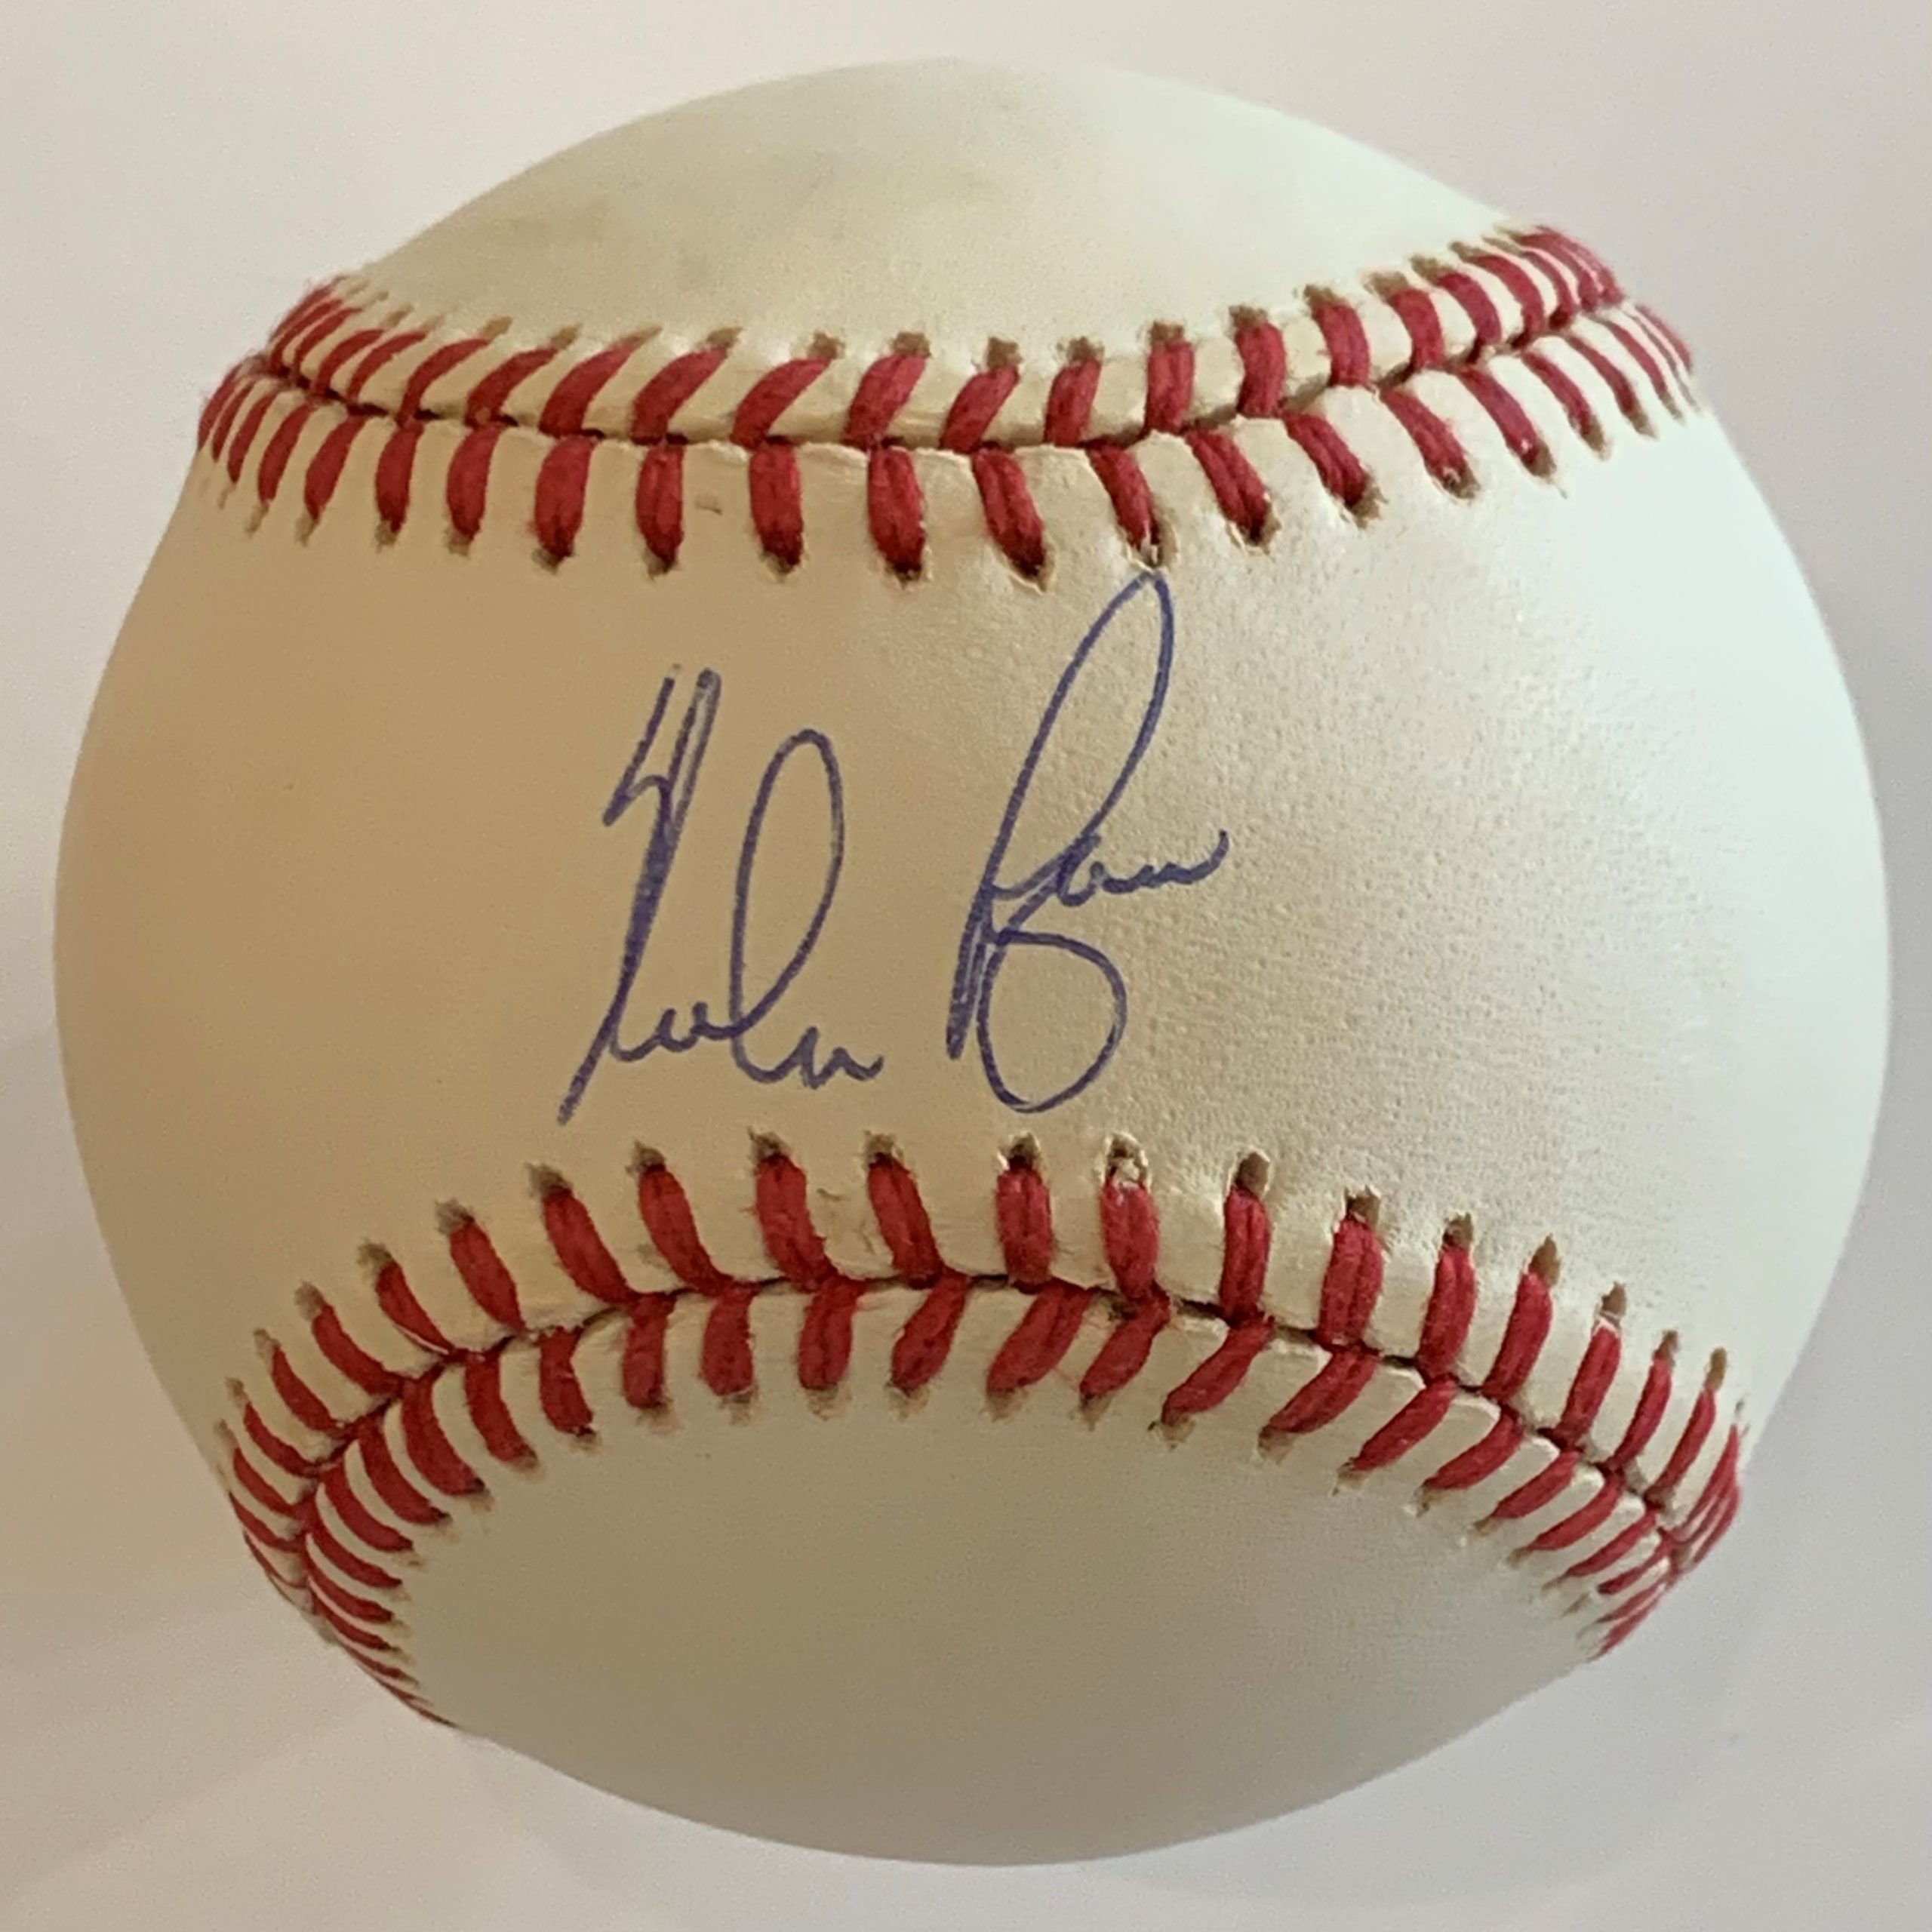 Autographed Major League Baseball – Nolan Ryan Foundation